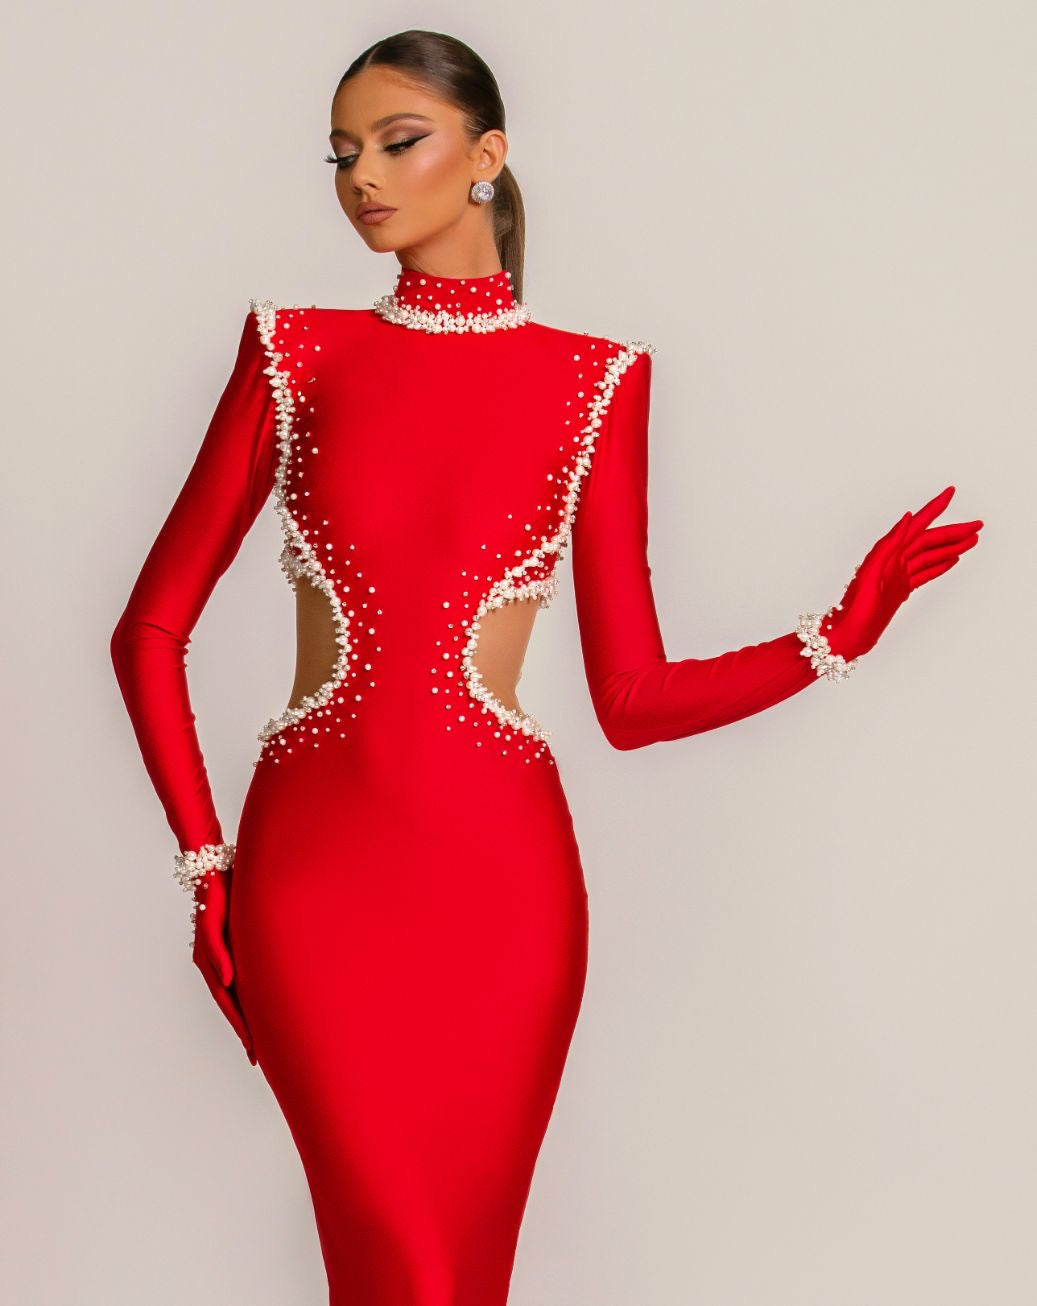 Cynthia Elegant Long Sleeves Red Evening Dress